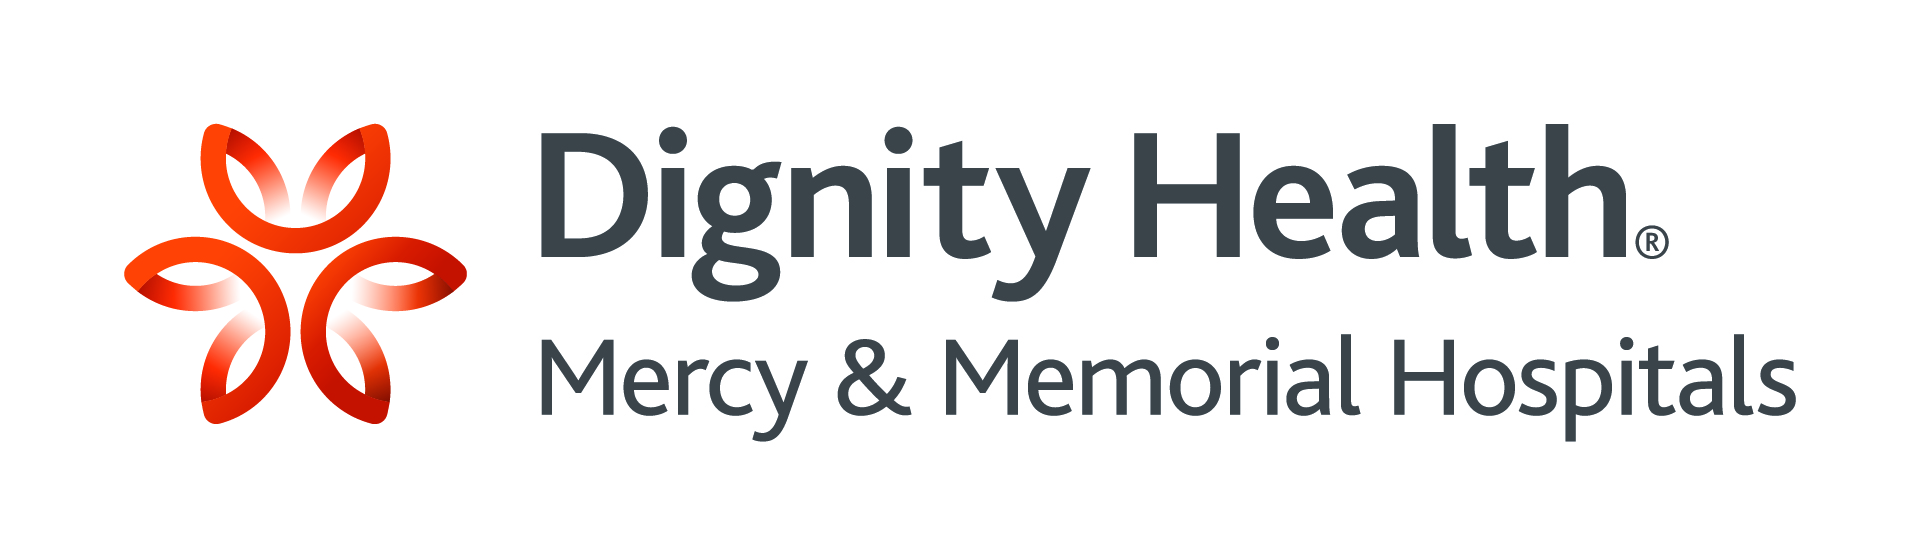 Dignity Health Mercy Memorial Hospital